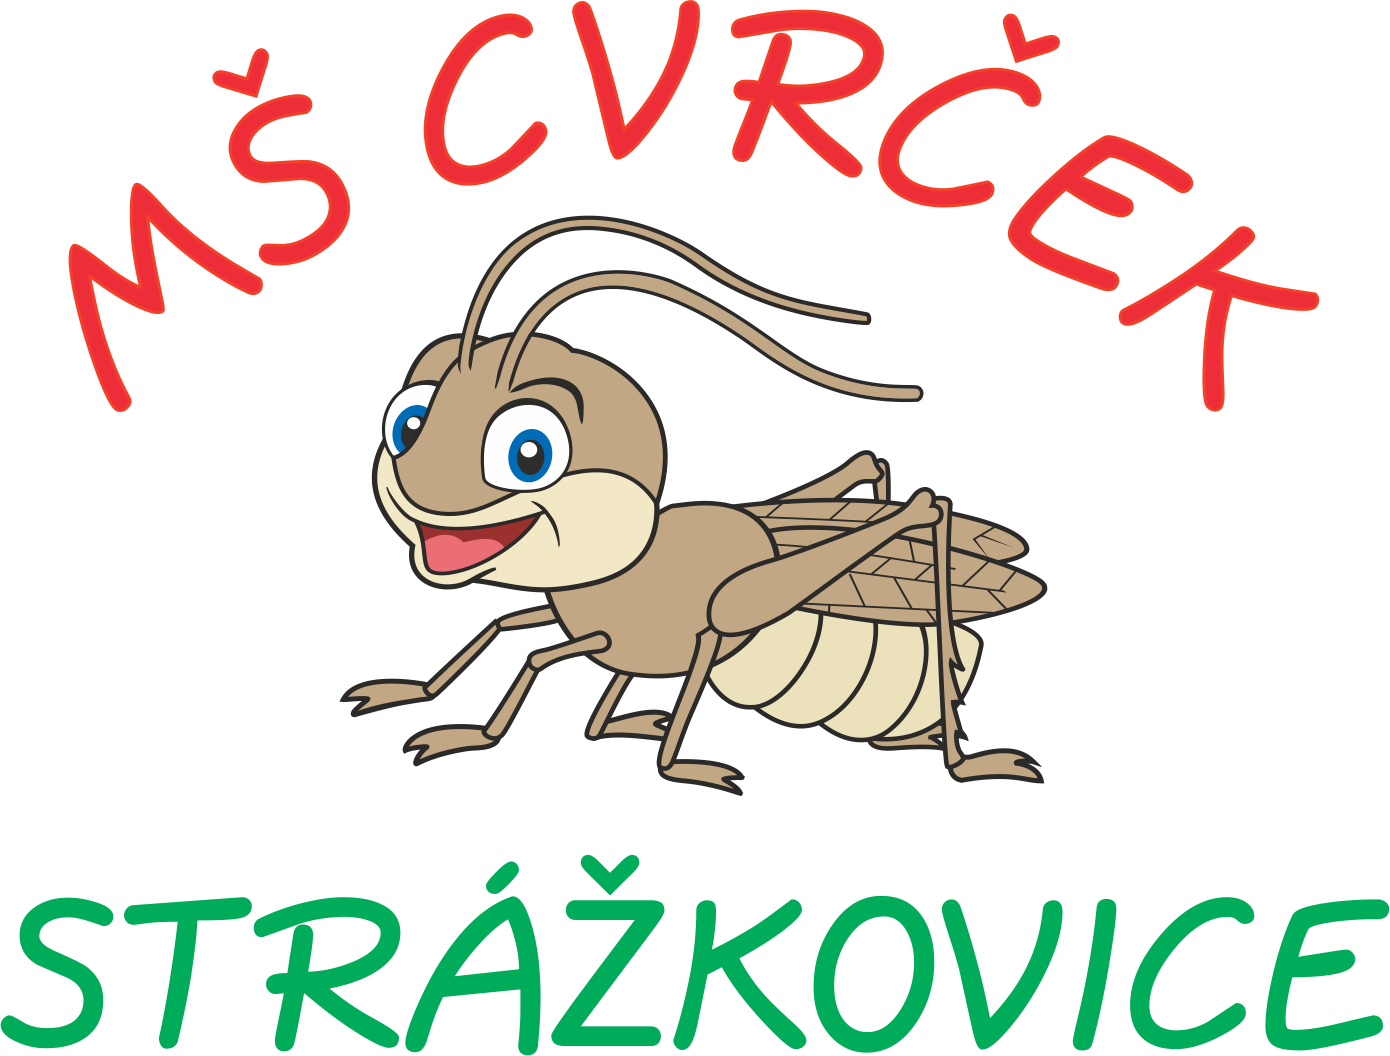 Mateřská škola Cvrček Strážkovice